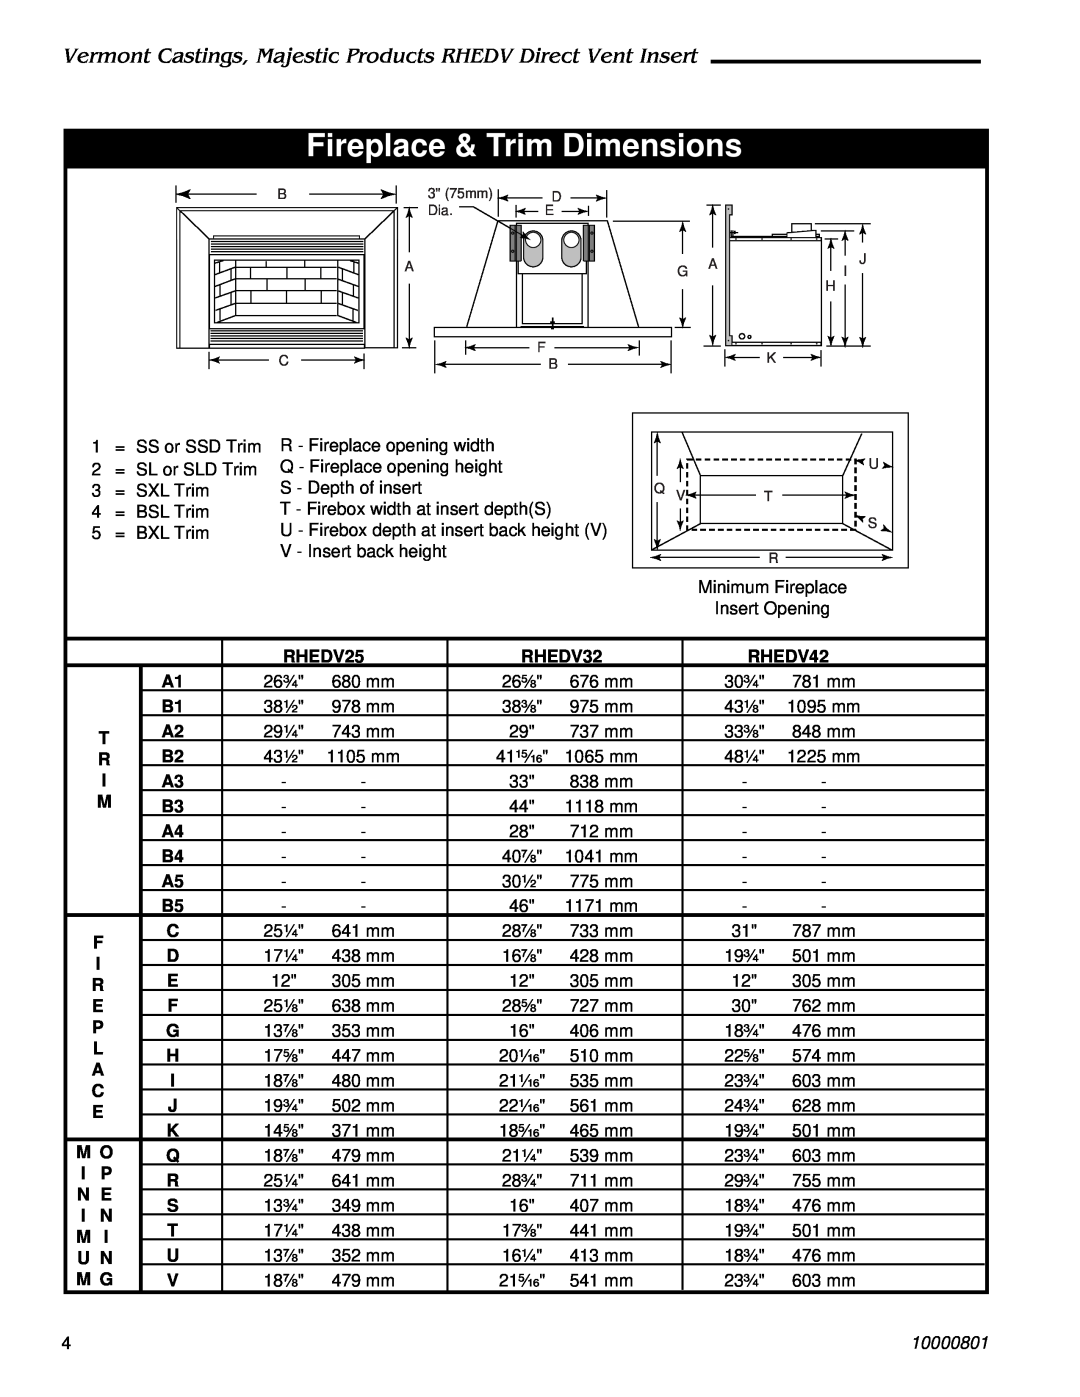 Vermont Casting RHEDV32 installation instructions Fireplace & Trim Dimensions, RHEDV25, RHEDV42, 10000801 